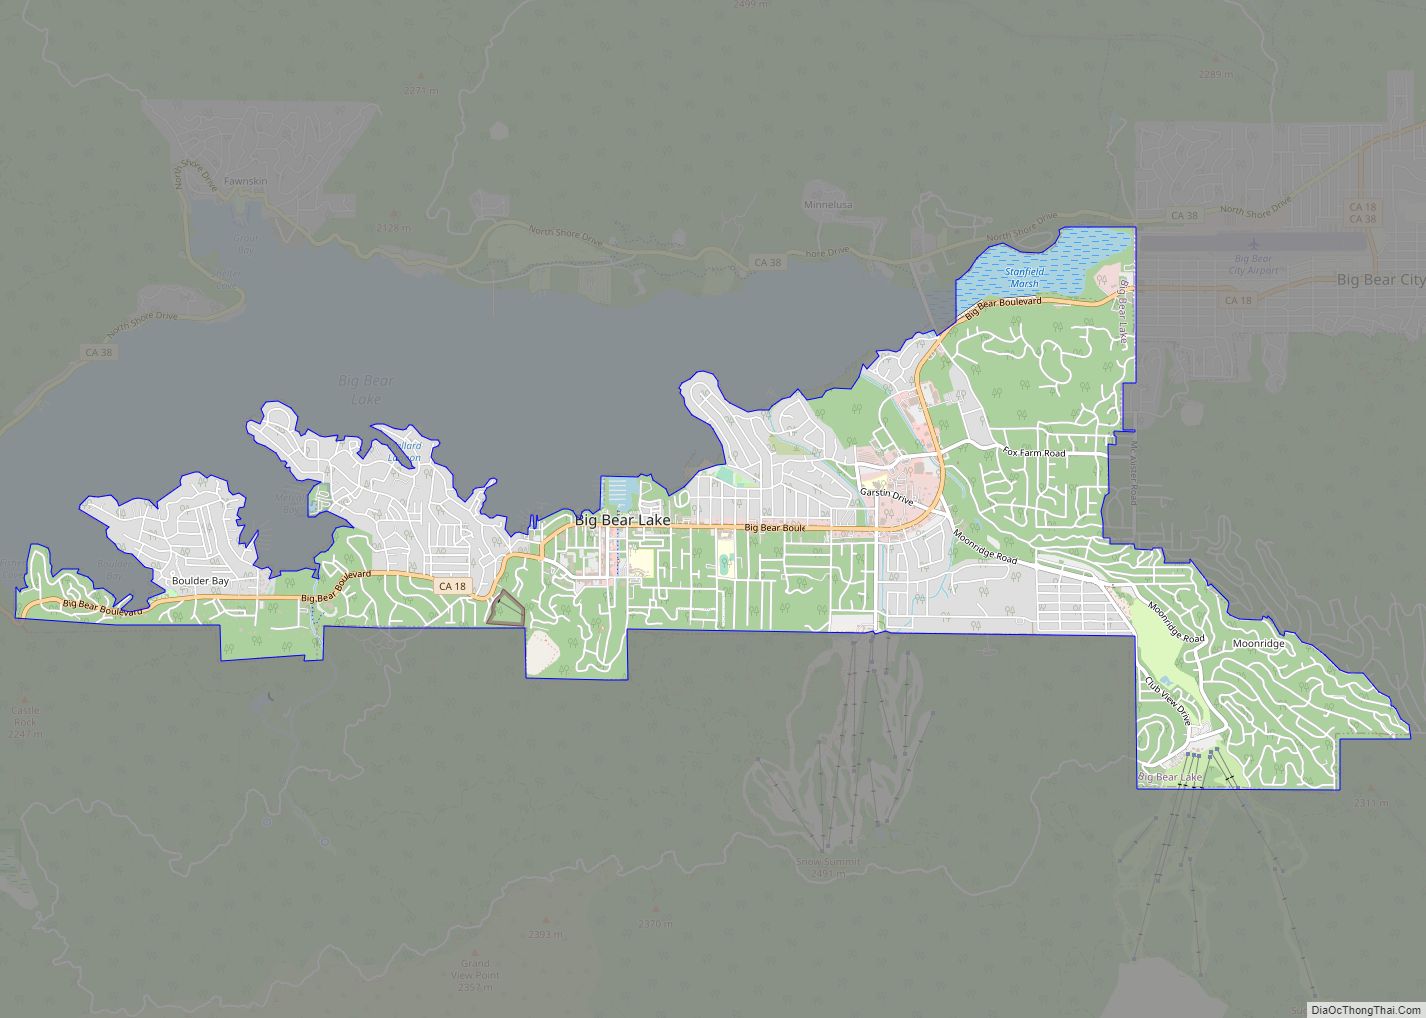 Map of Big Bear Lake city